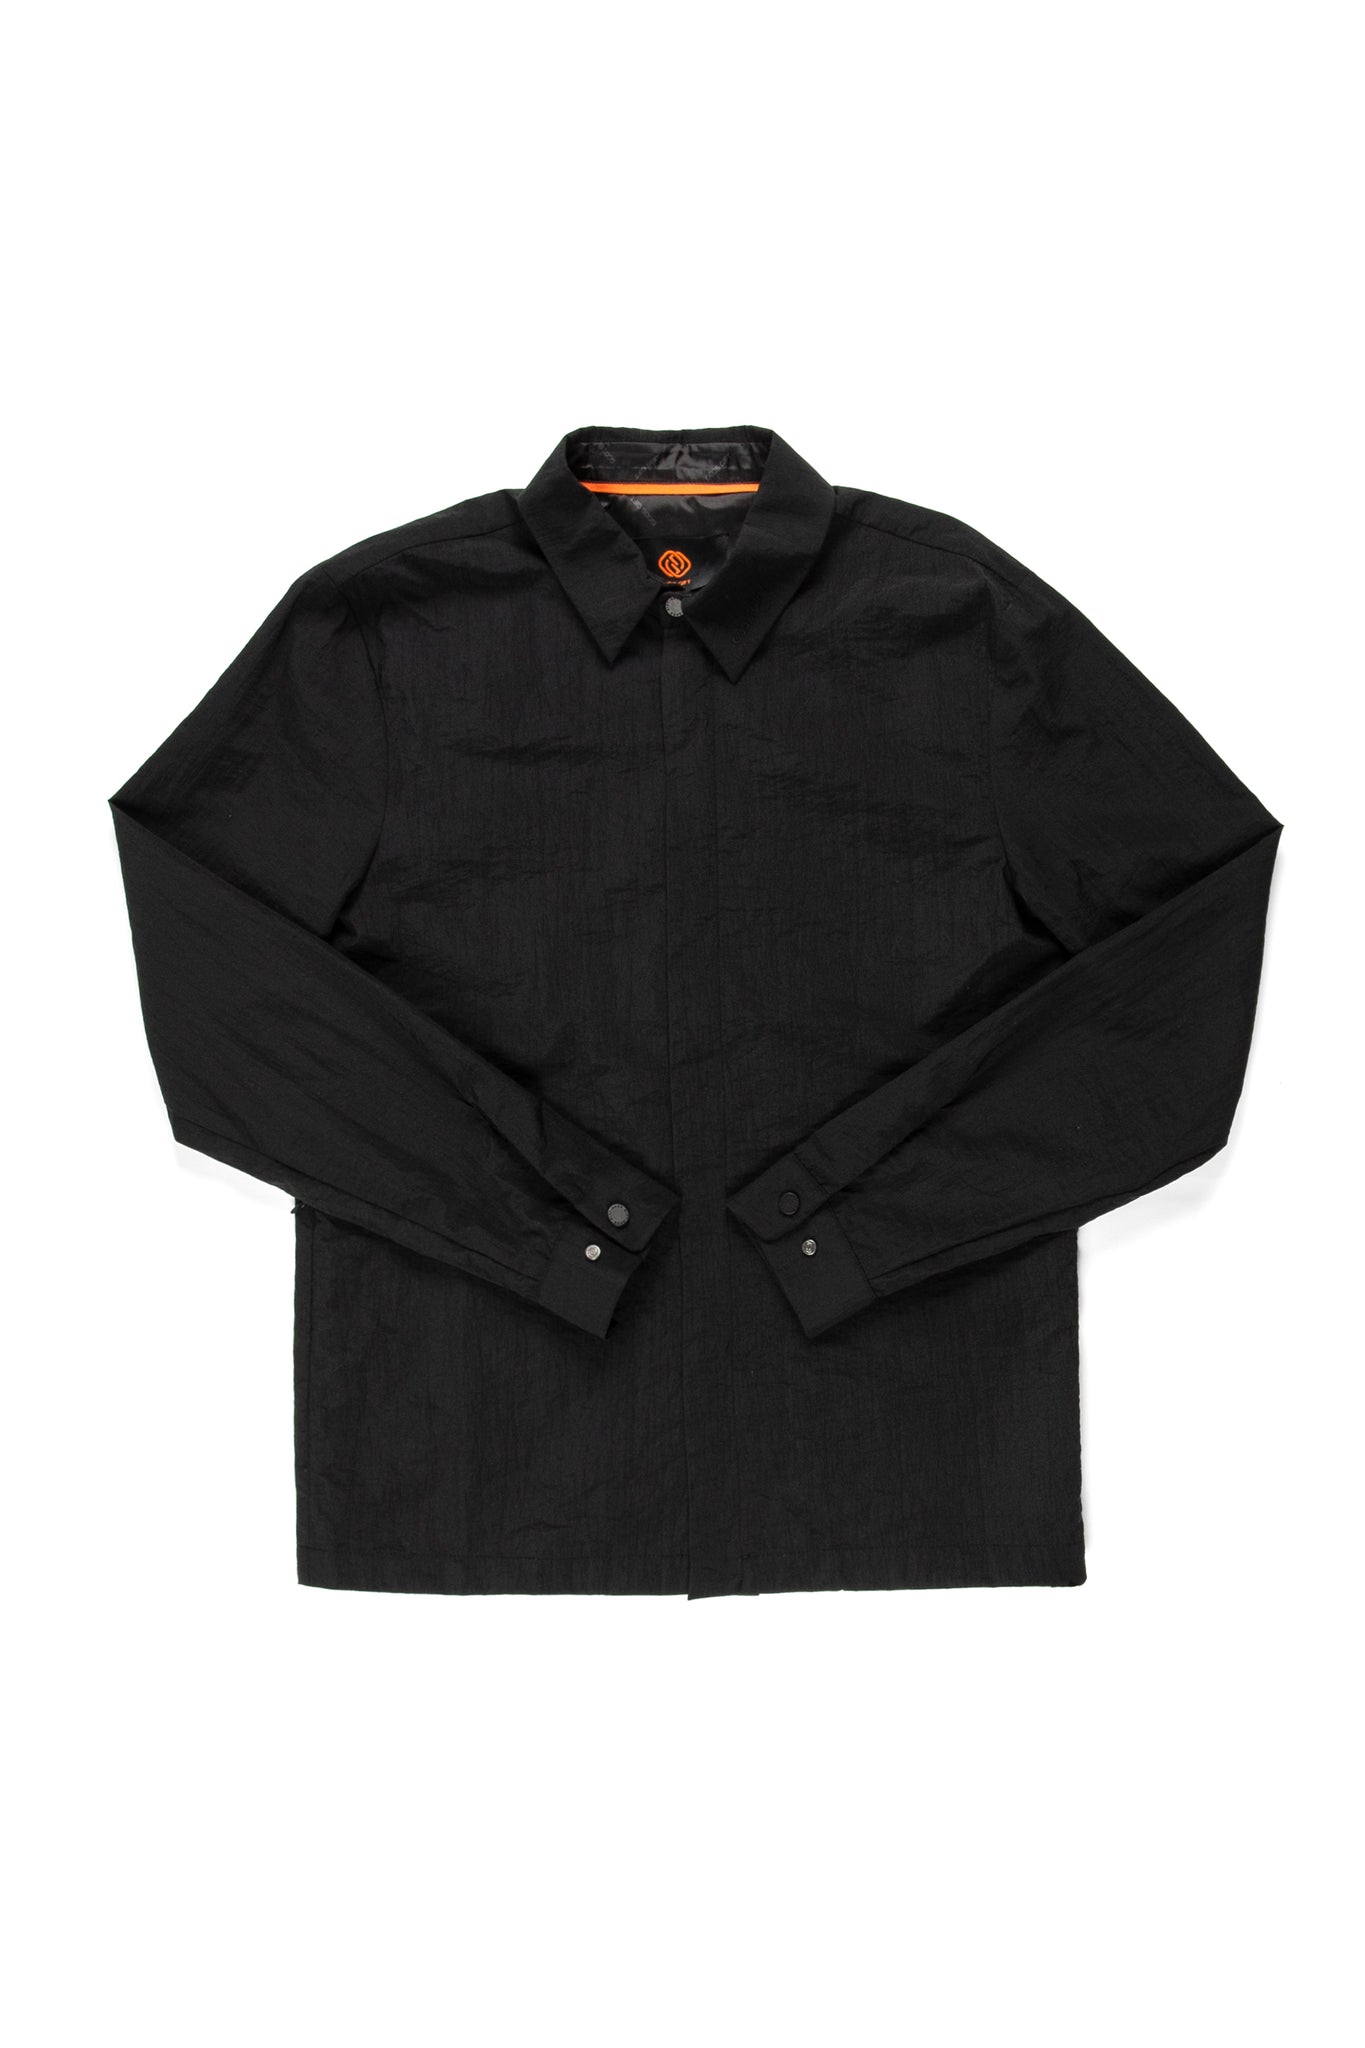 Parma Shirt in Black